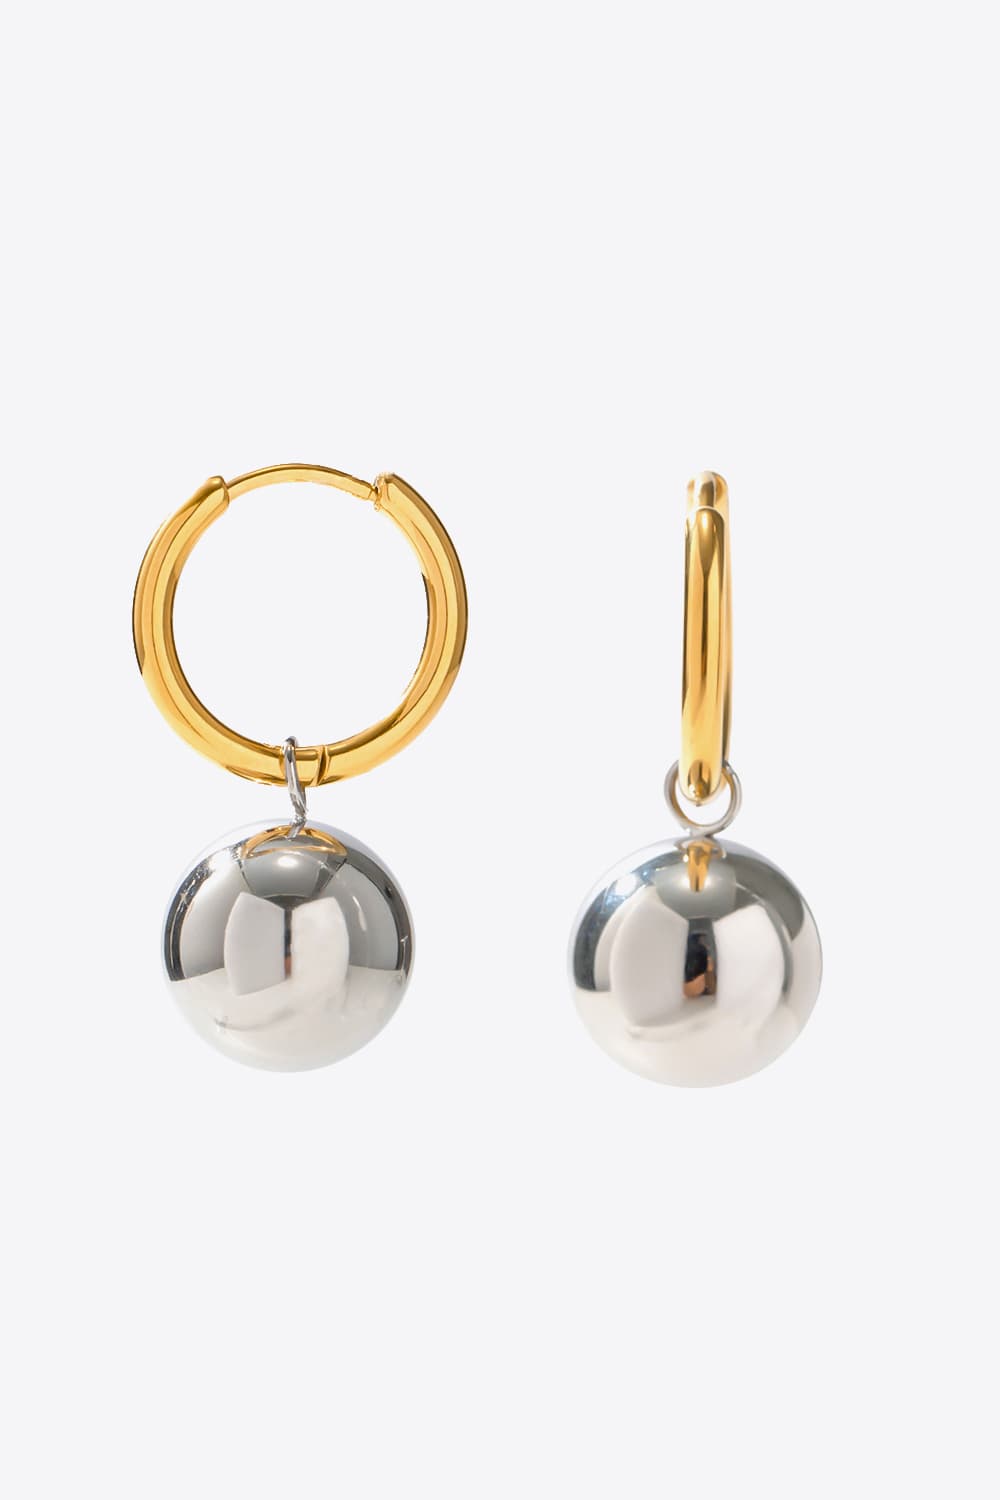 18K Gold-Plated Copper Ball Drop Earrings - Earrings - FITGGINS